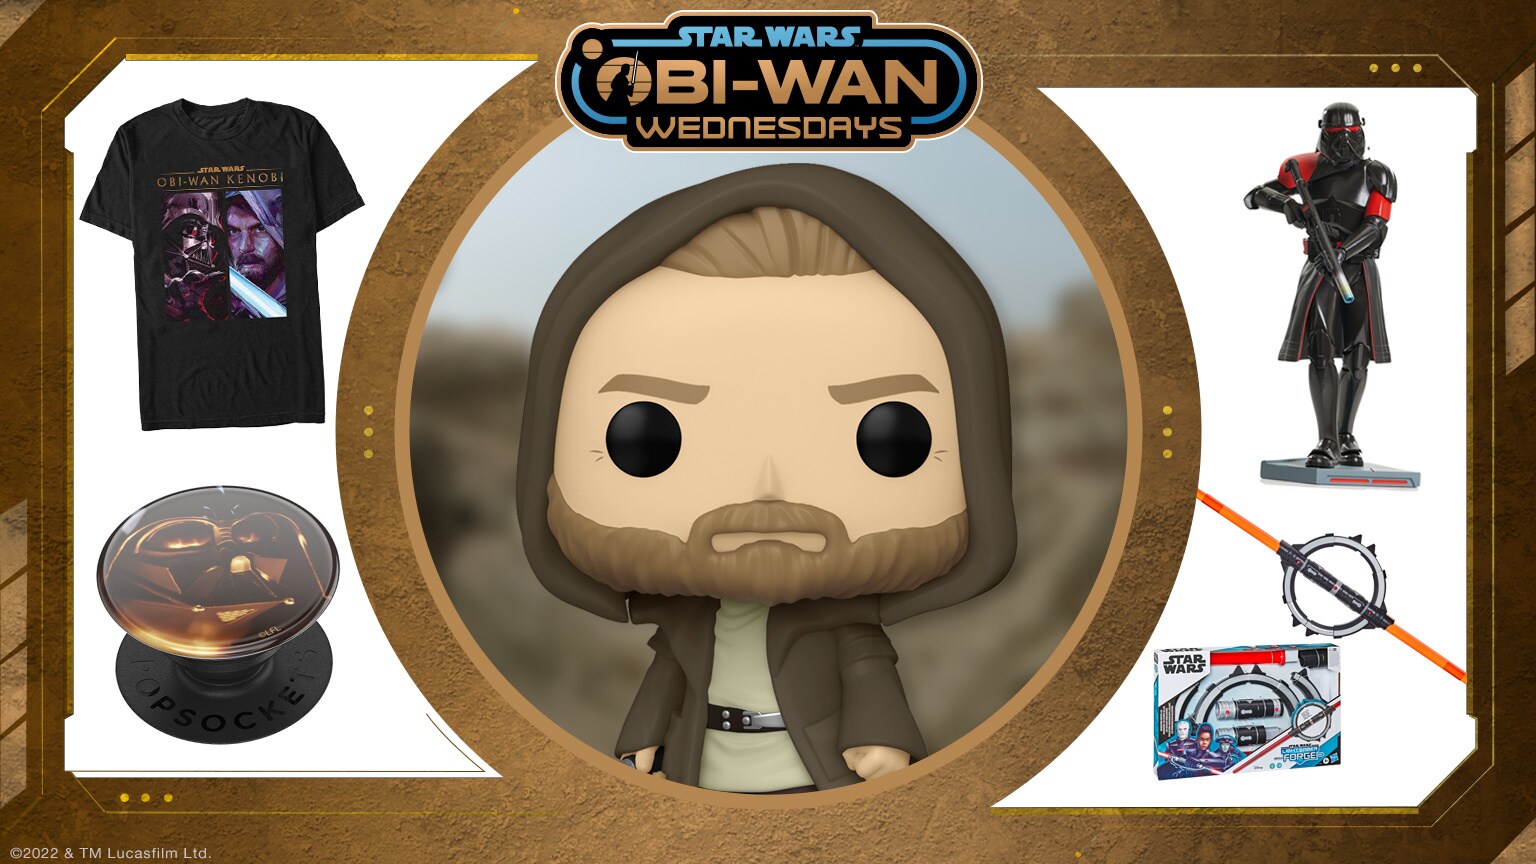 Obi-Wan Wednesdays Week 5: Obi-Wan Kenobi Funko Pop!s and